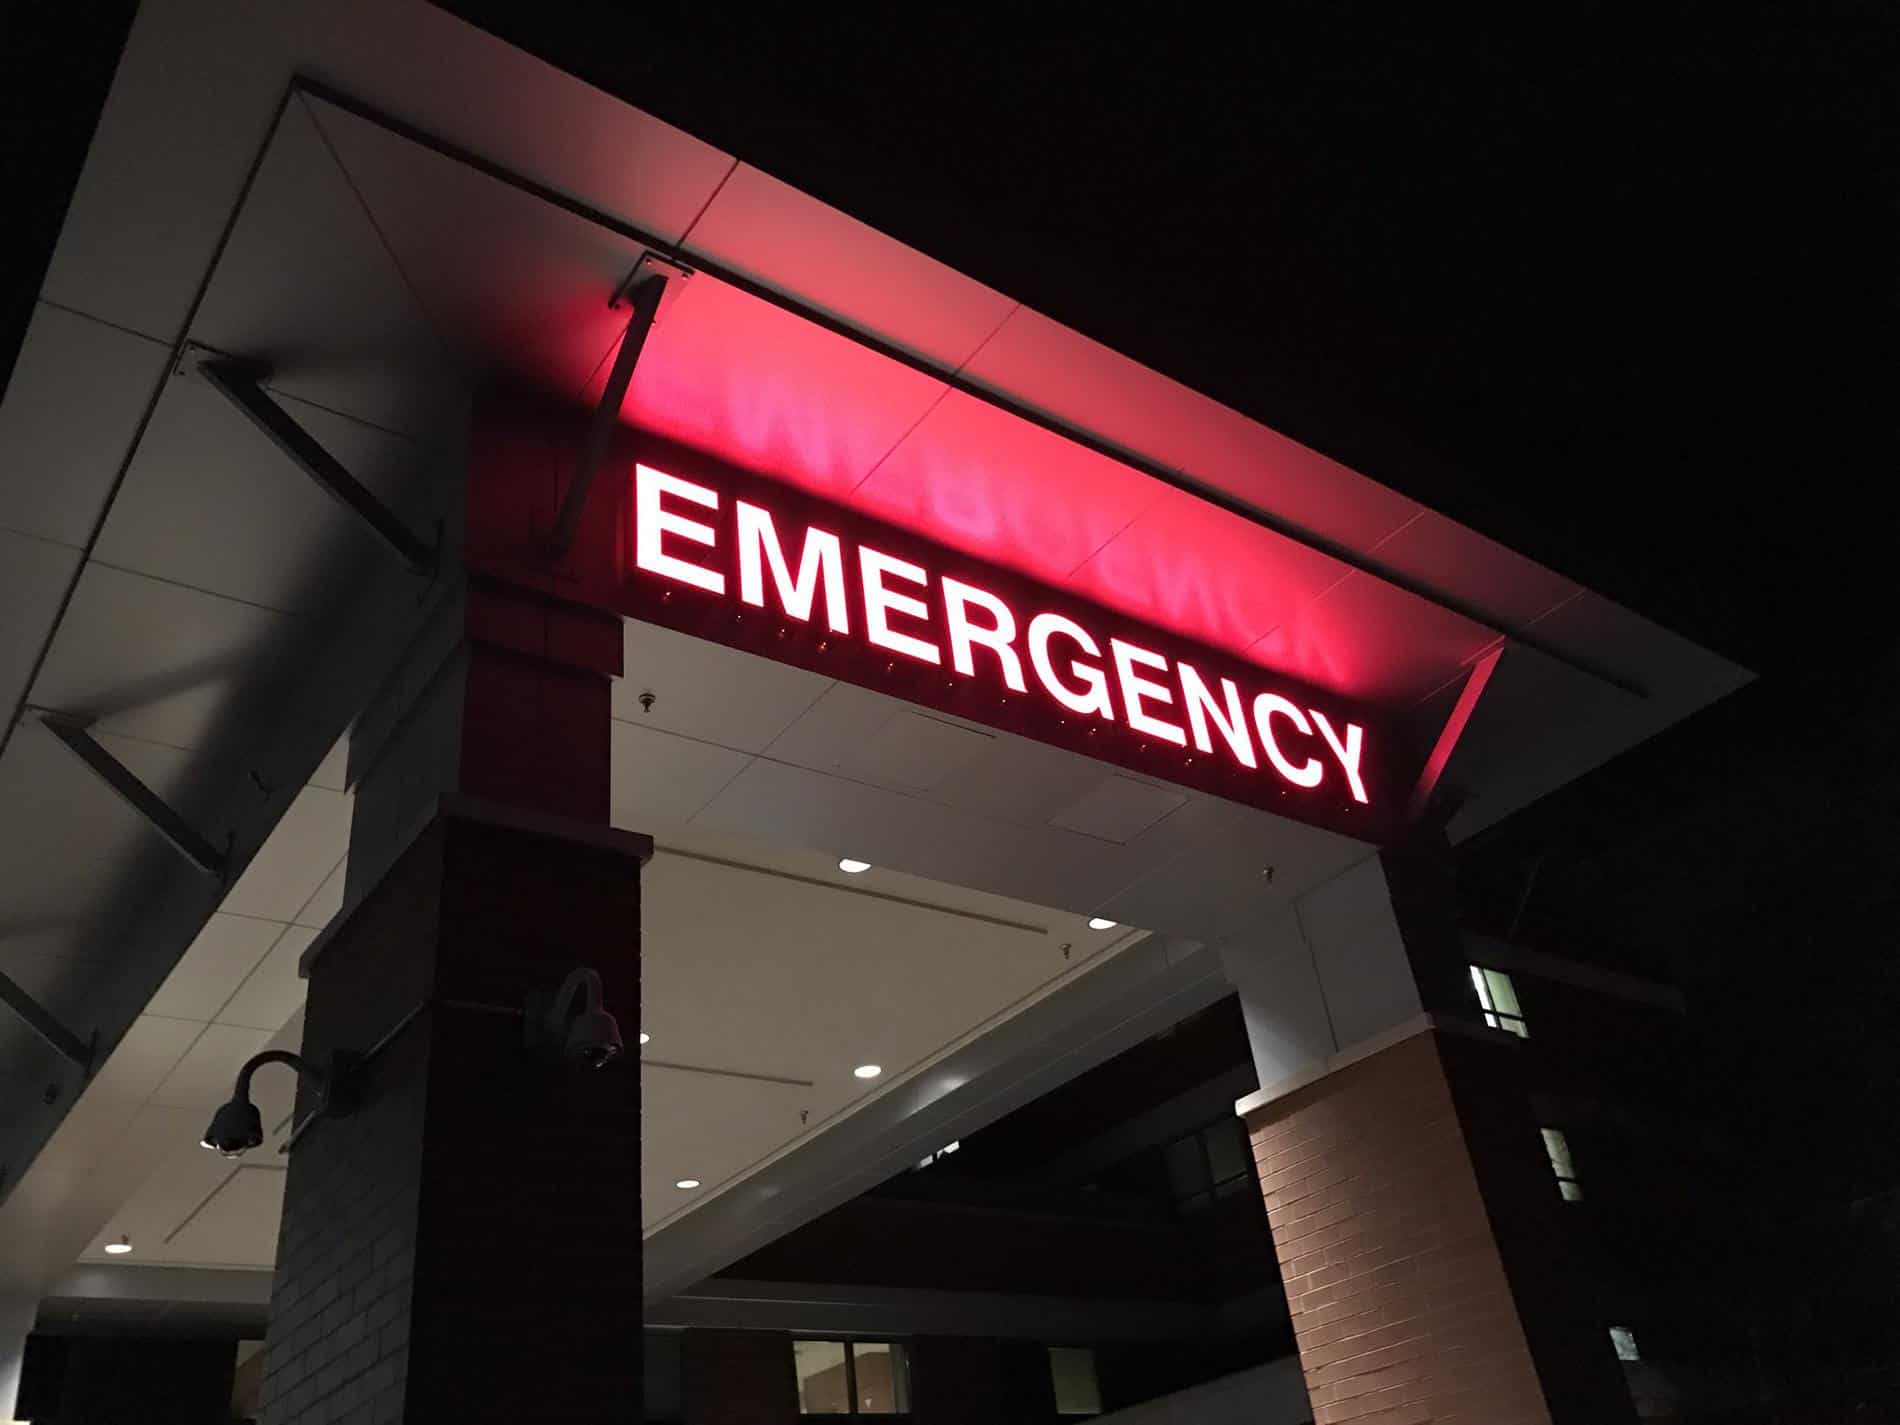 
                     Emergency Room #night #emergency #hospital #red #lights
                     